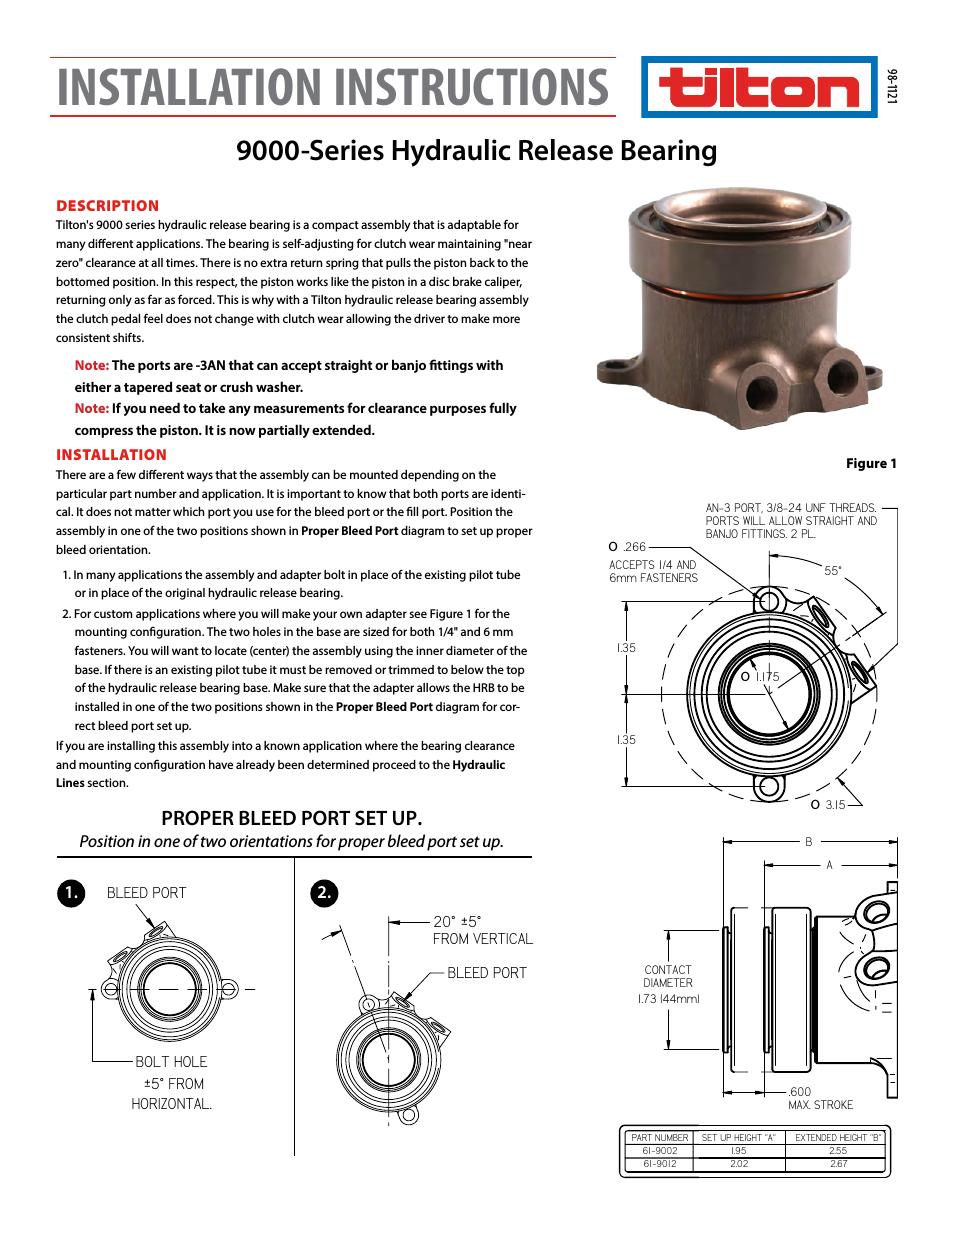 9000-Series Hydraulic Release Bearing (98-1121)